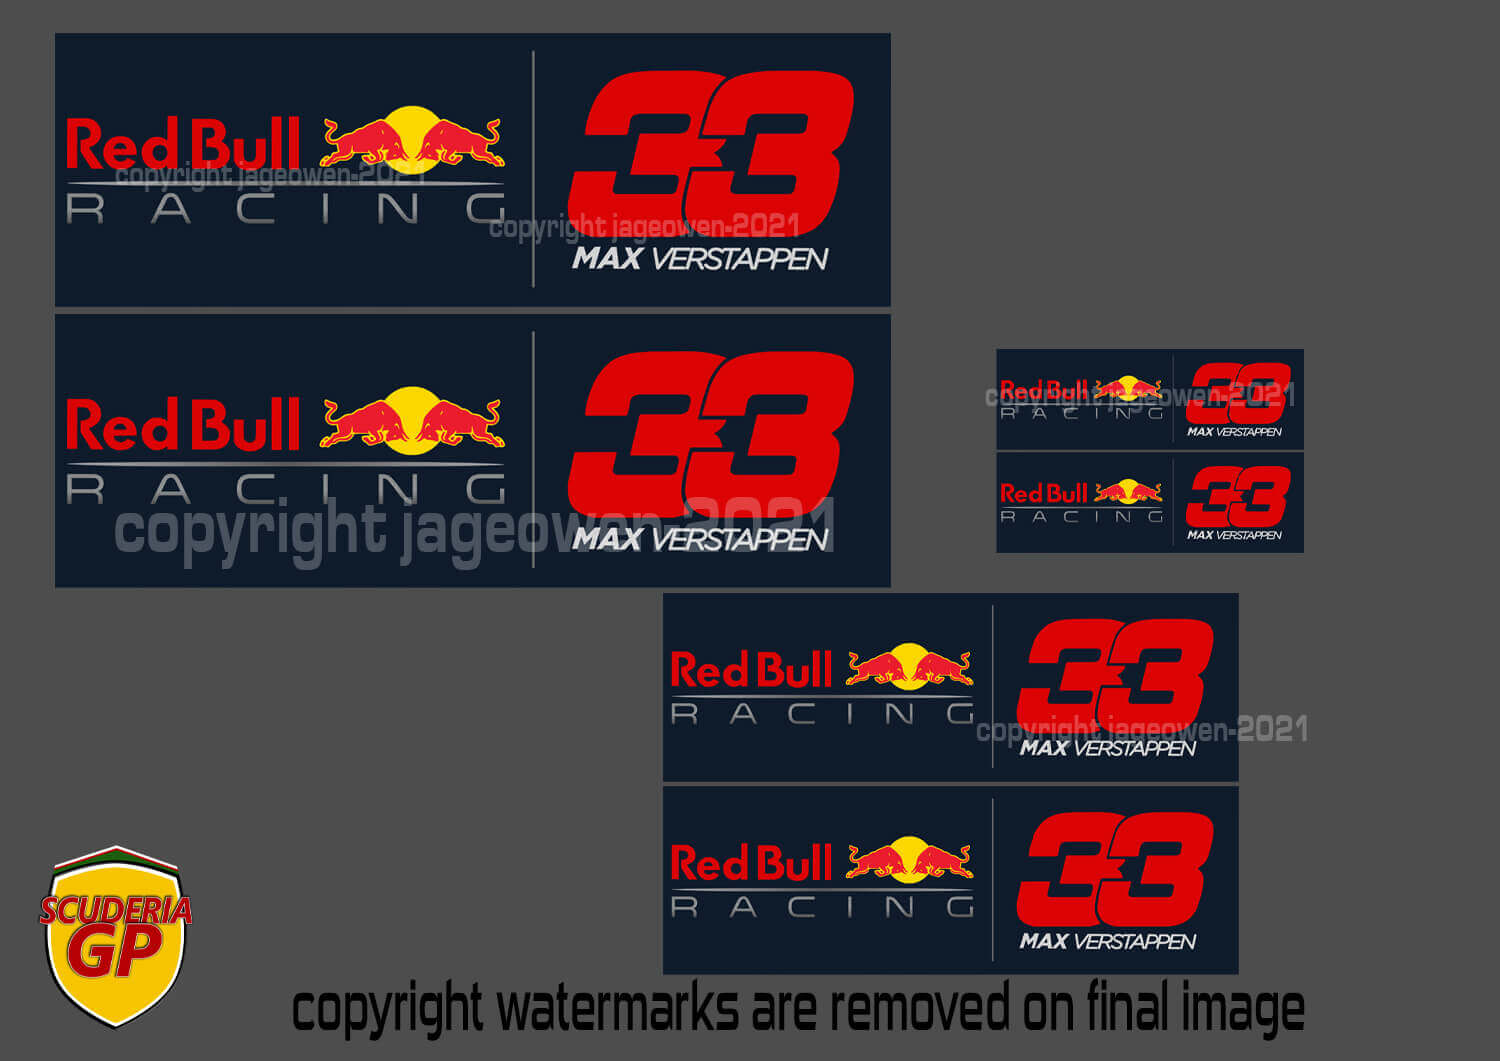 Red Bull 2021 Max Verstappen (Behind Wheel) Racing Sticker – Scuderia GP